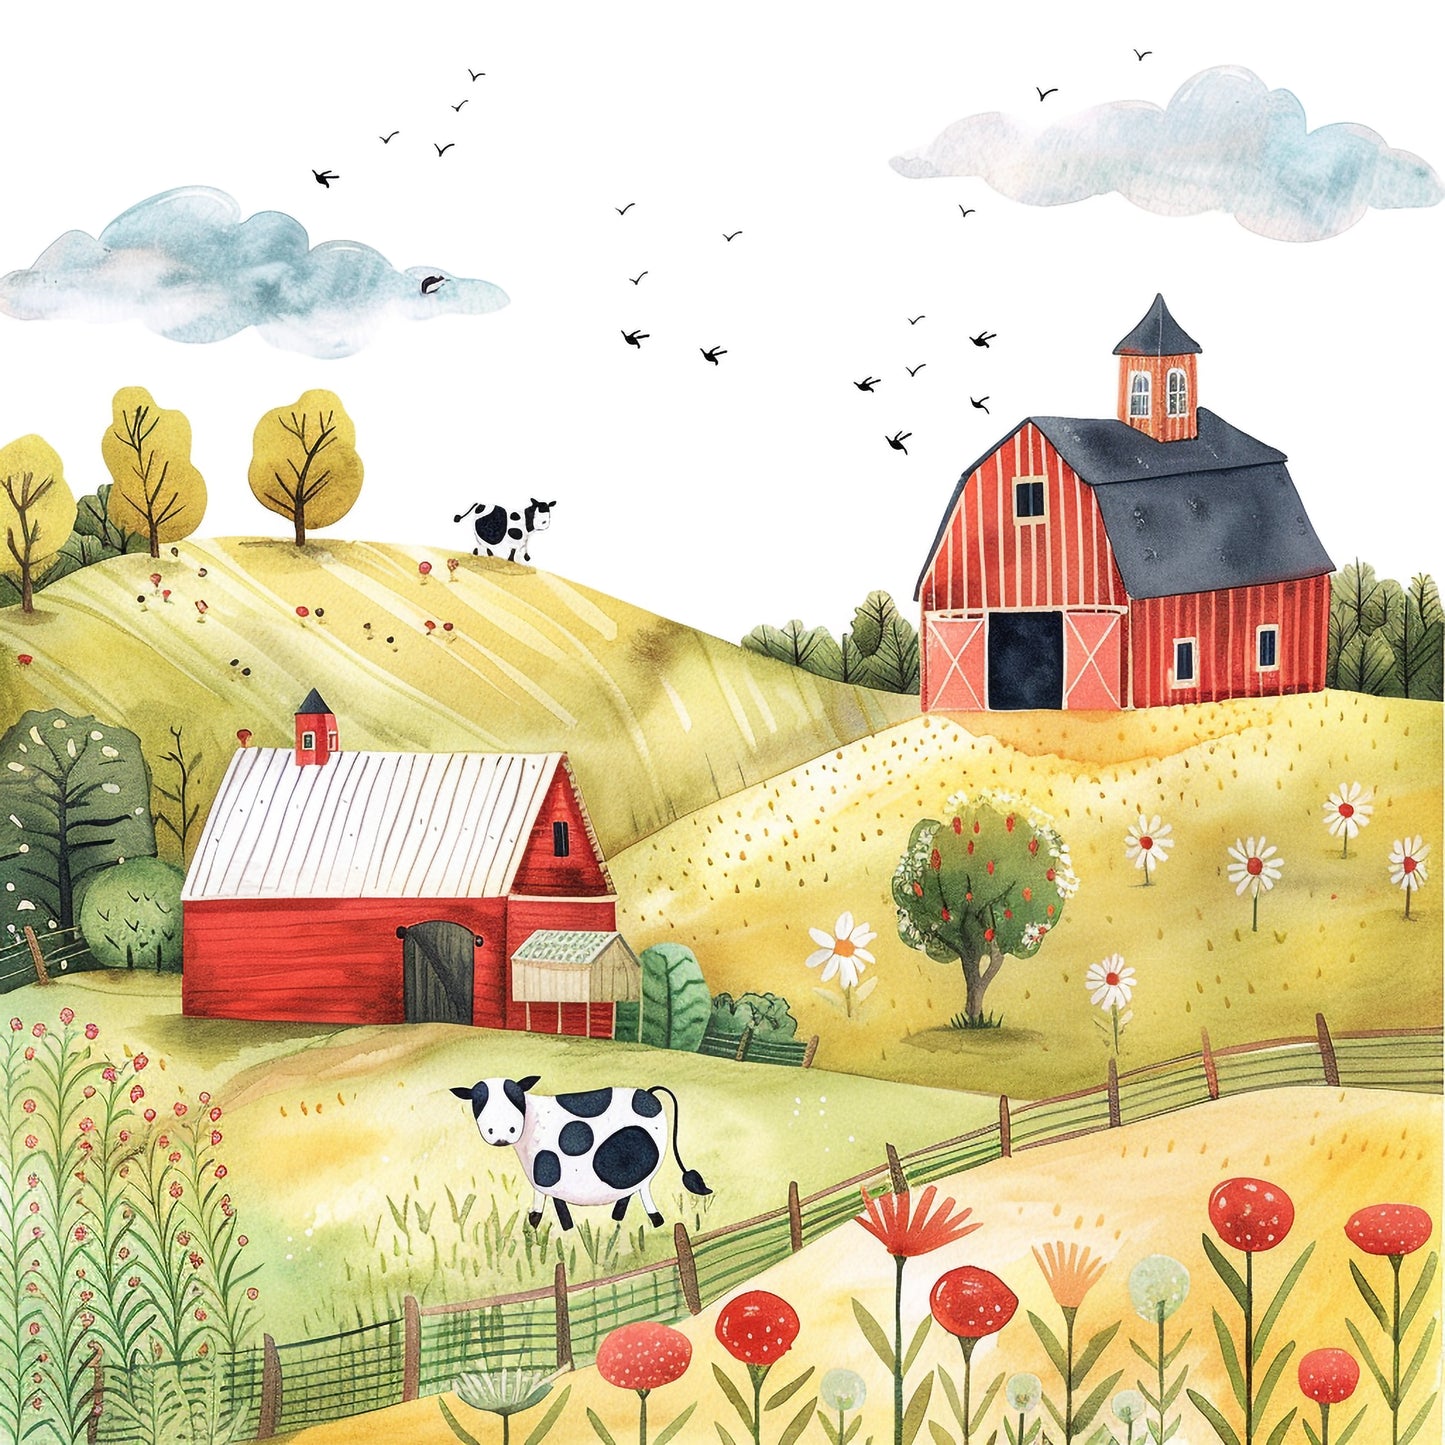 Idyllic Rural Farm Scene in Watercolor Illustration